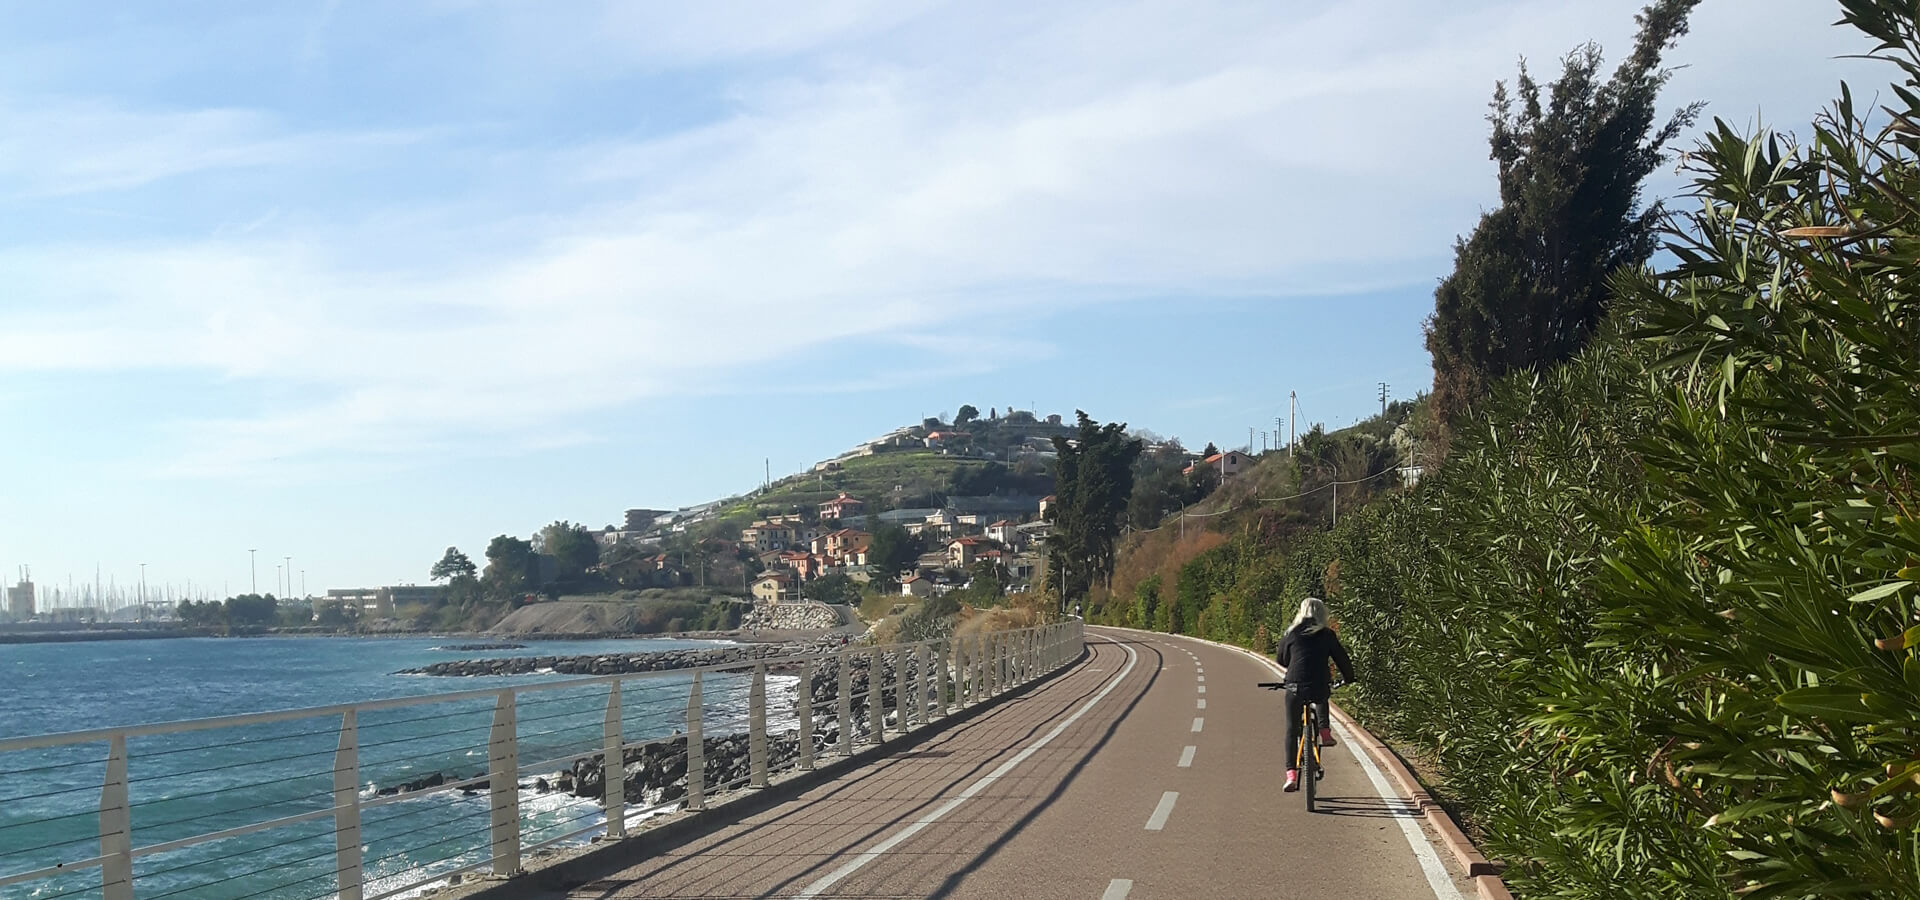 Ponente Ligure bike path from San Lorenzo al Mare to Ospedaletti